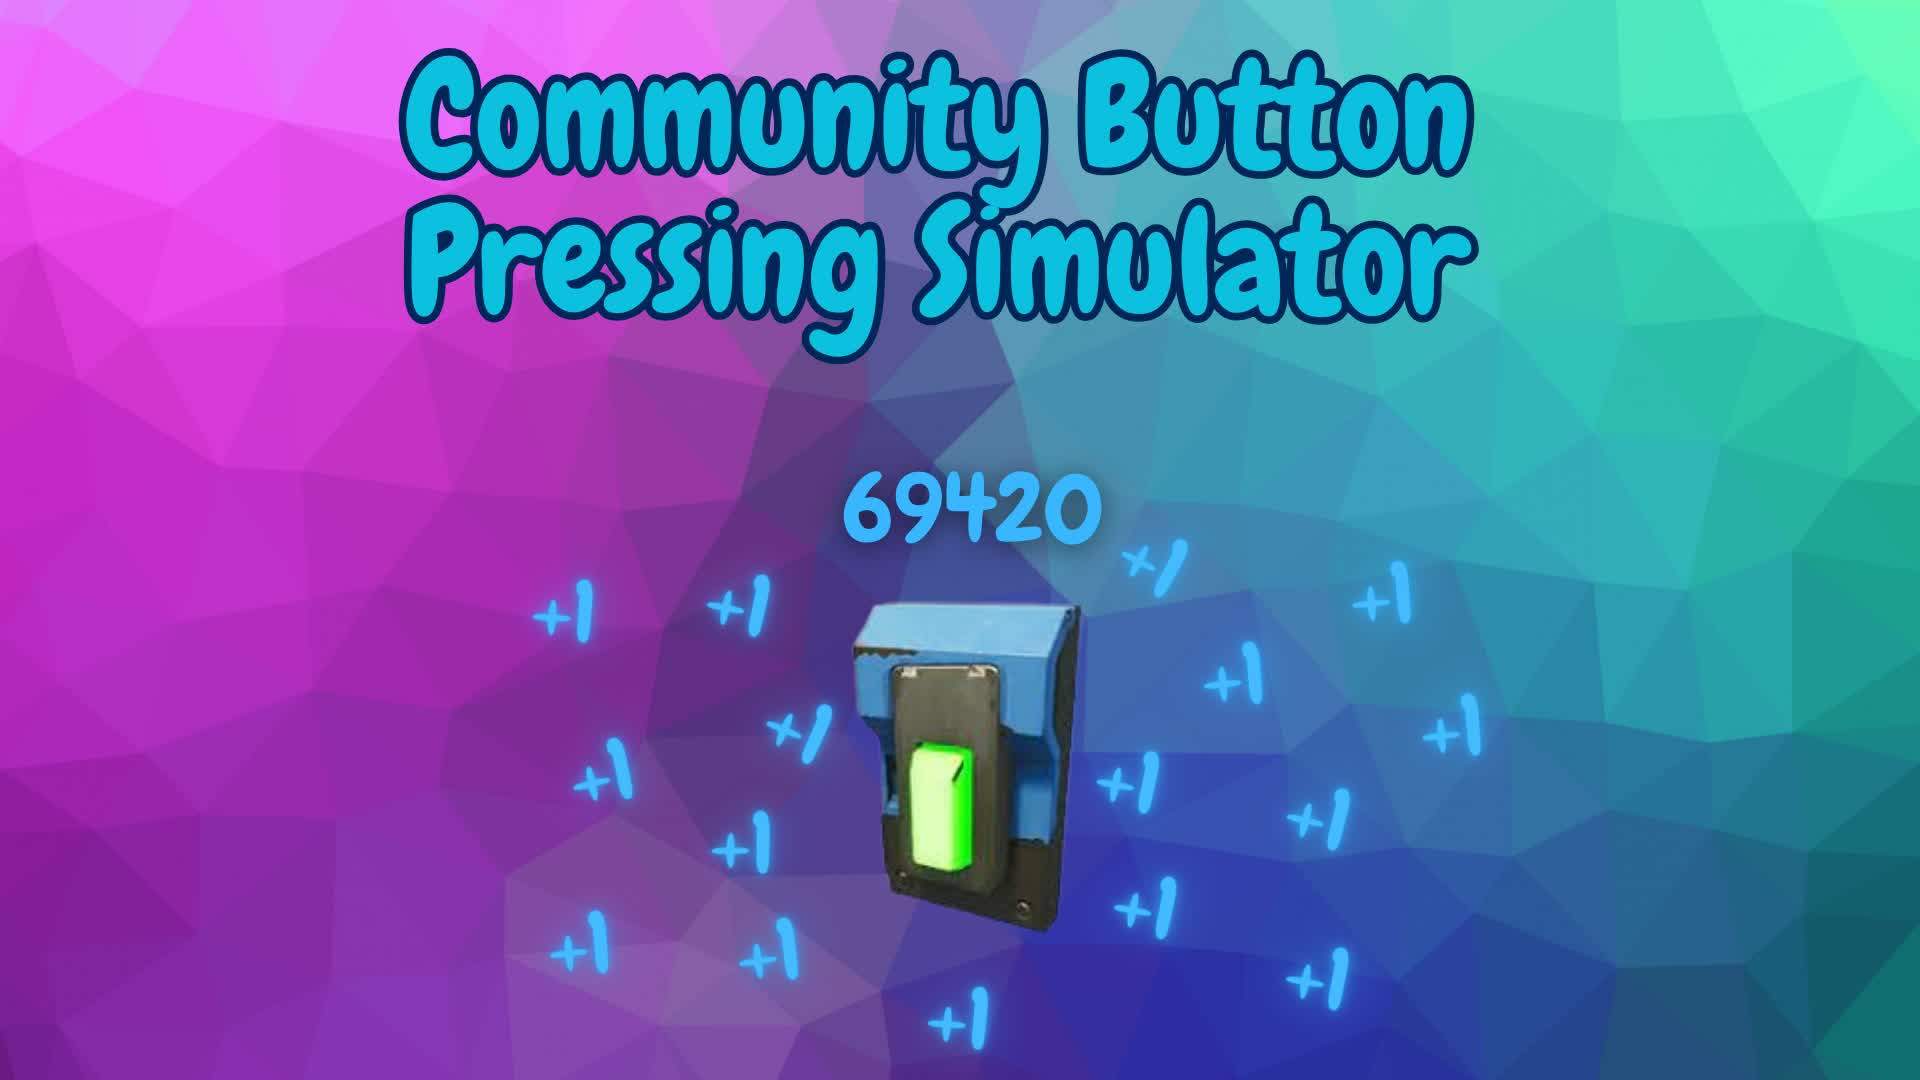 Community Button Pressing Simulator